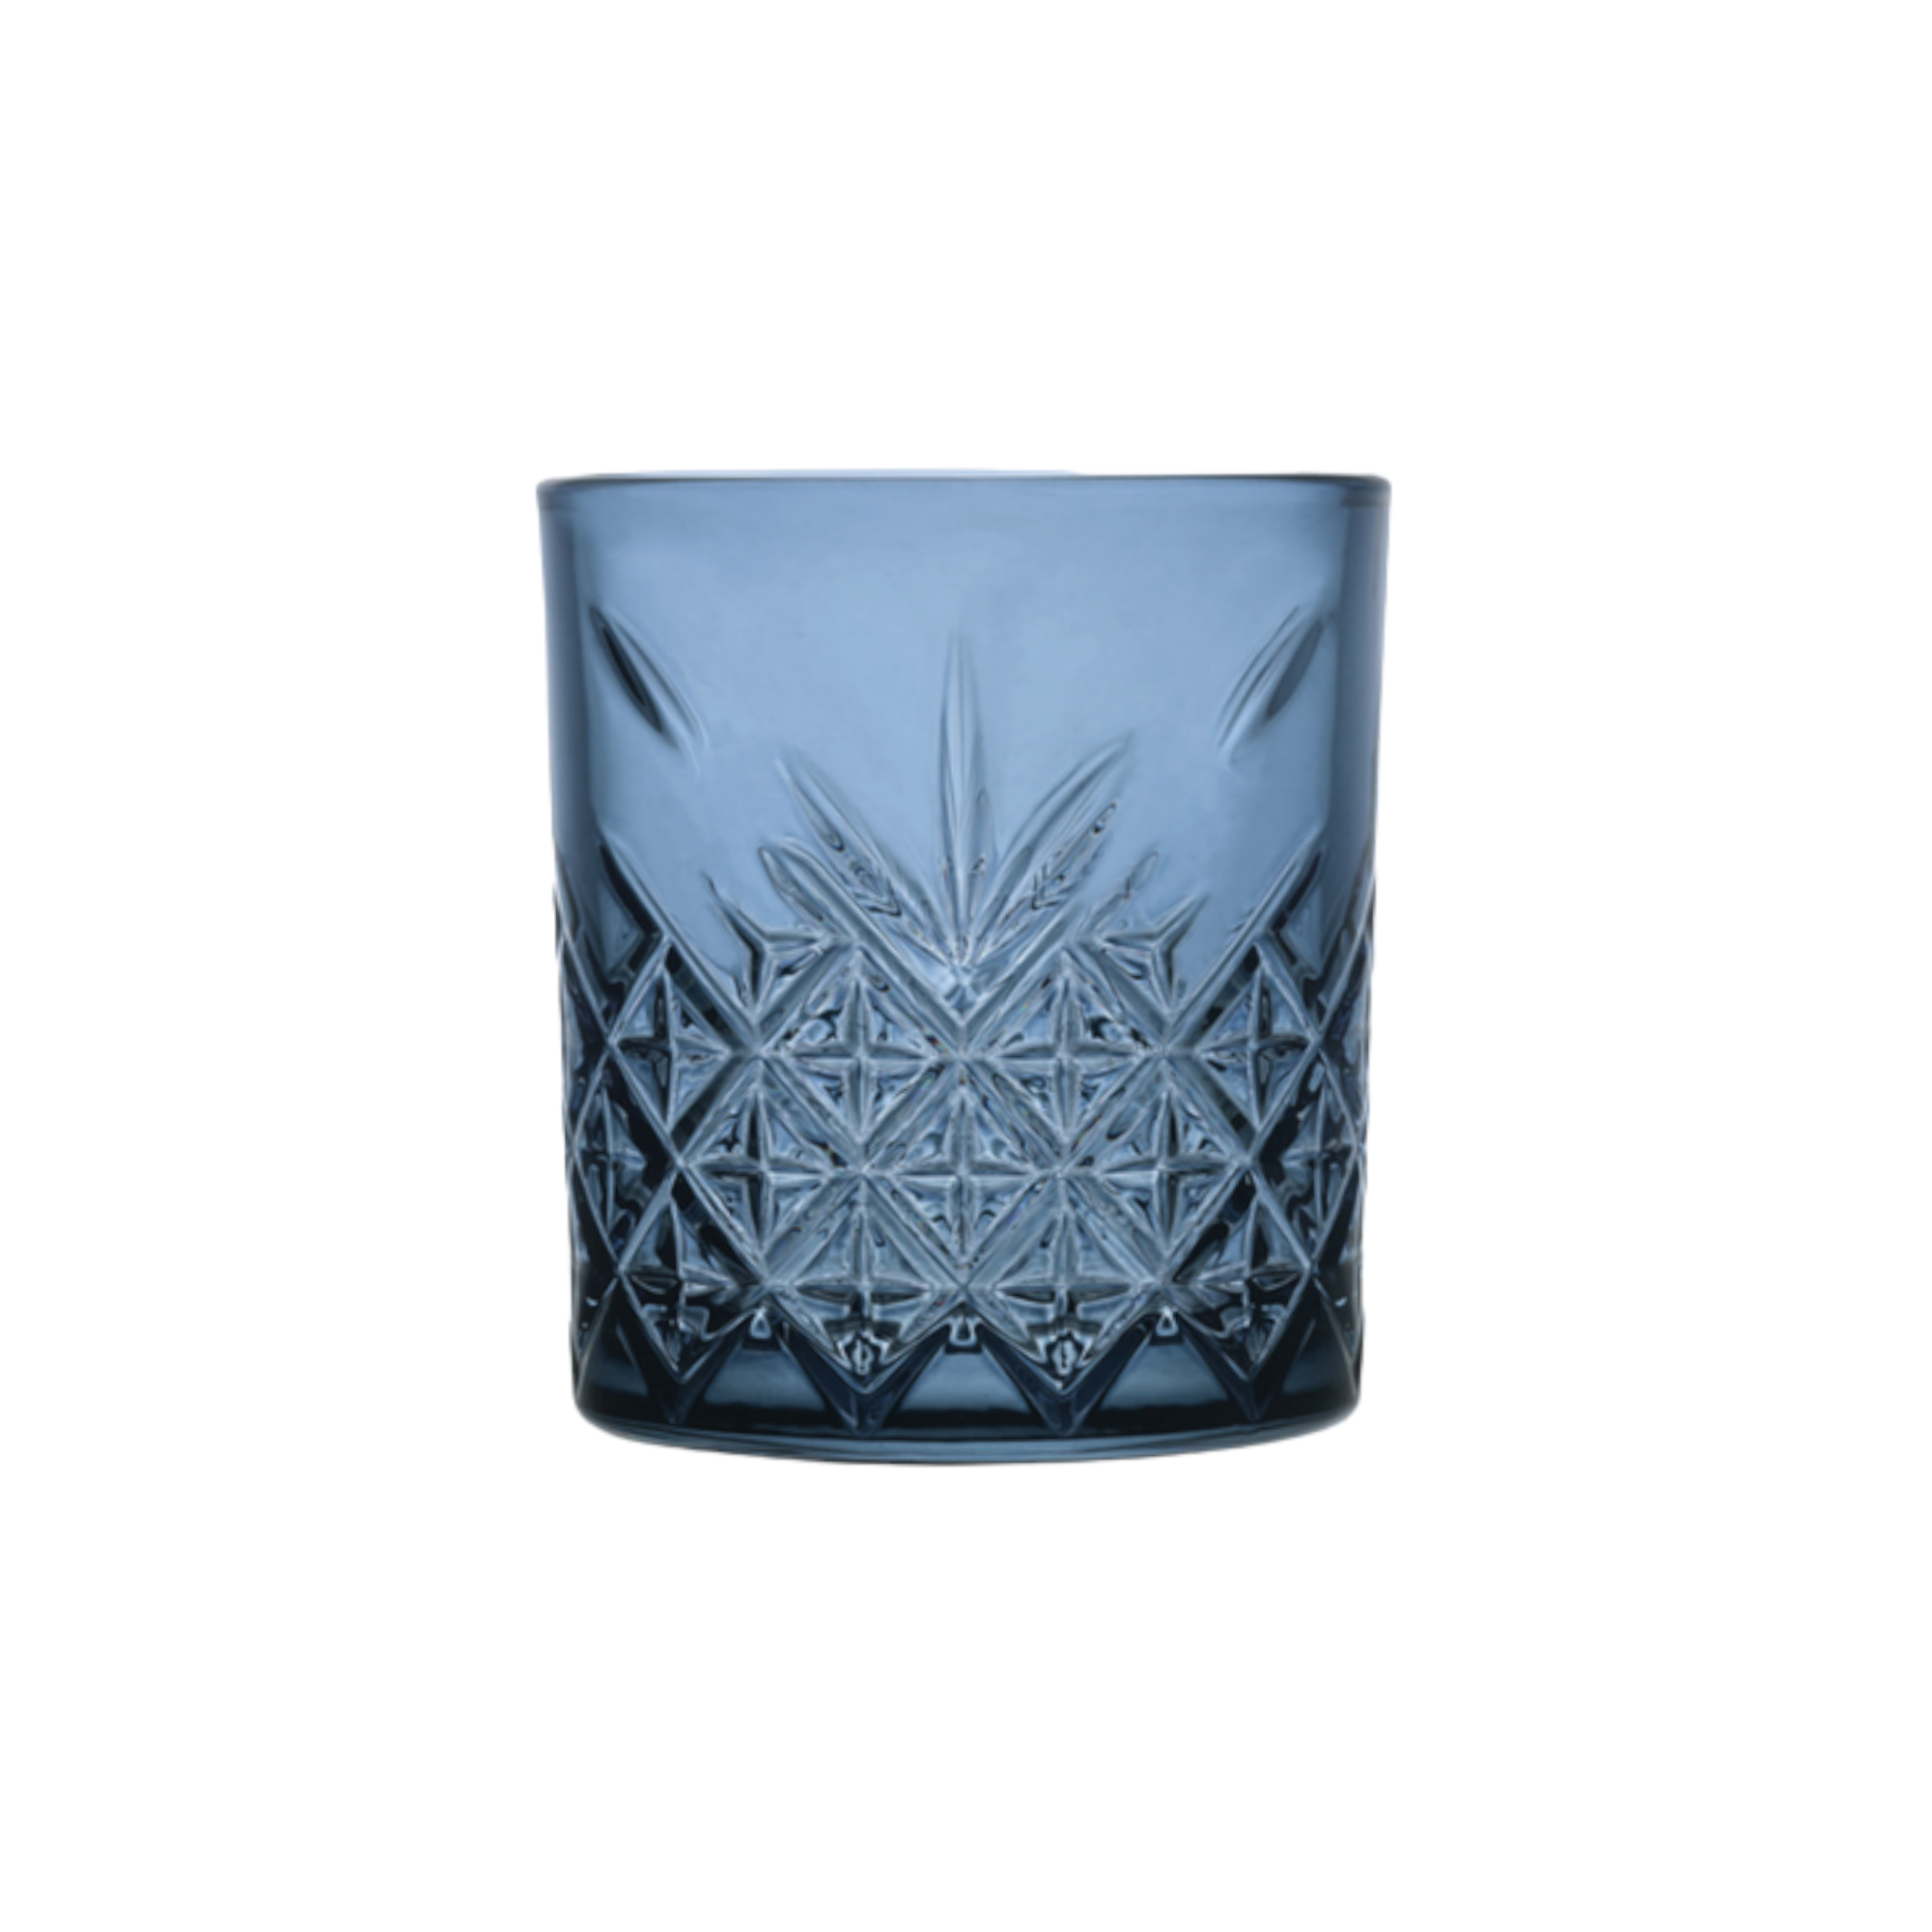 Pasabahce Timeless Glass Tumbler 345ml Whisky Blue 4pc 24202